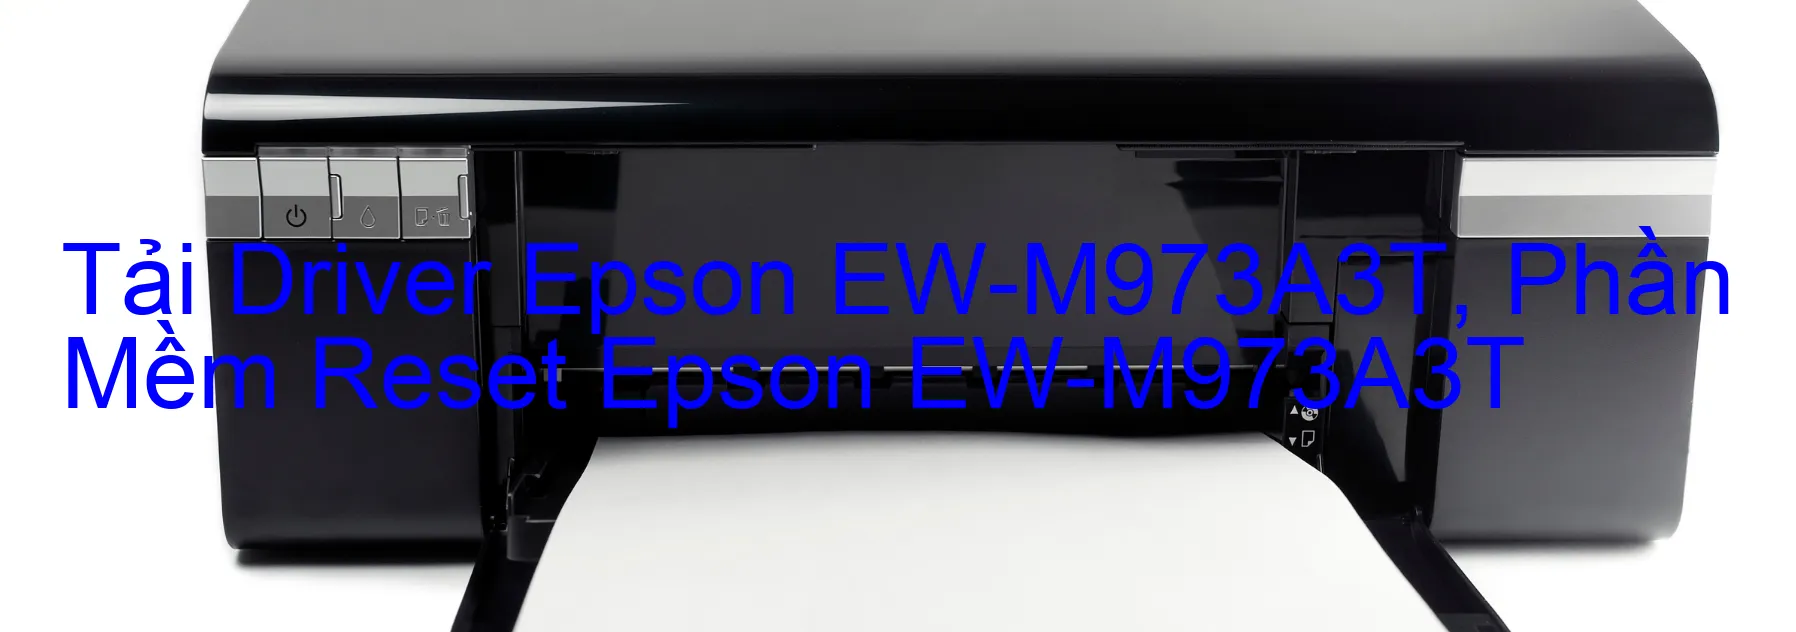 Driver Epson EW-M973A3T, Phần Mềm Reset Epson EW-M973A3T